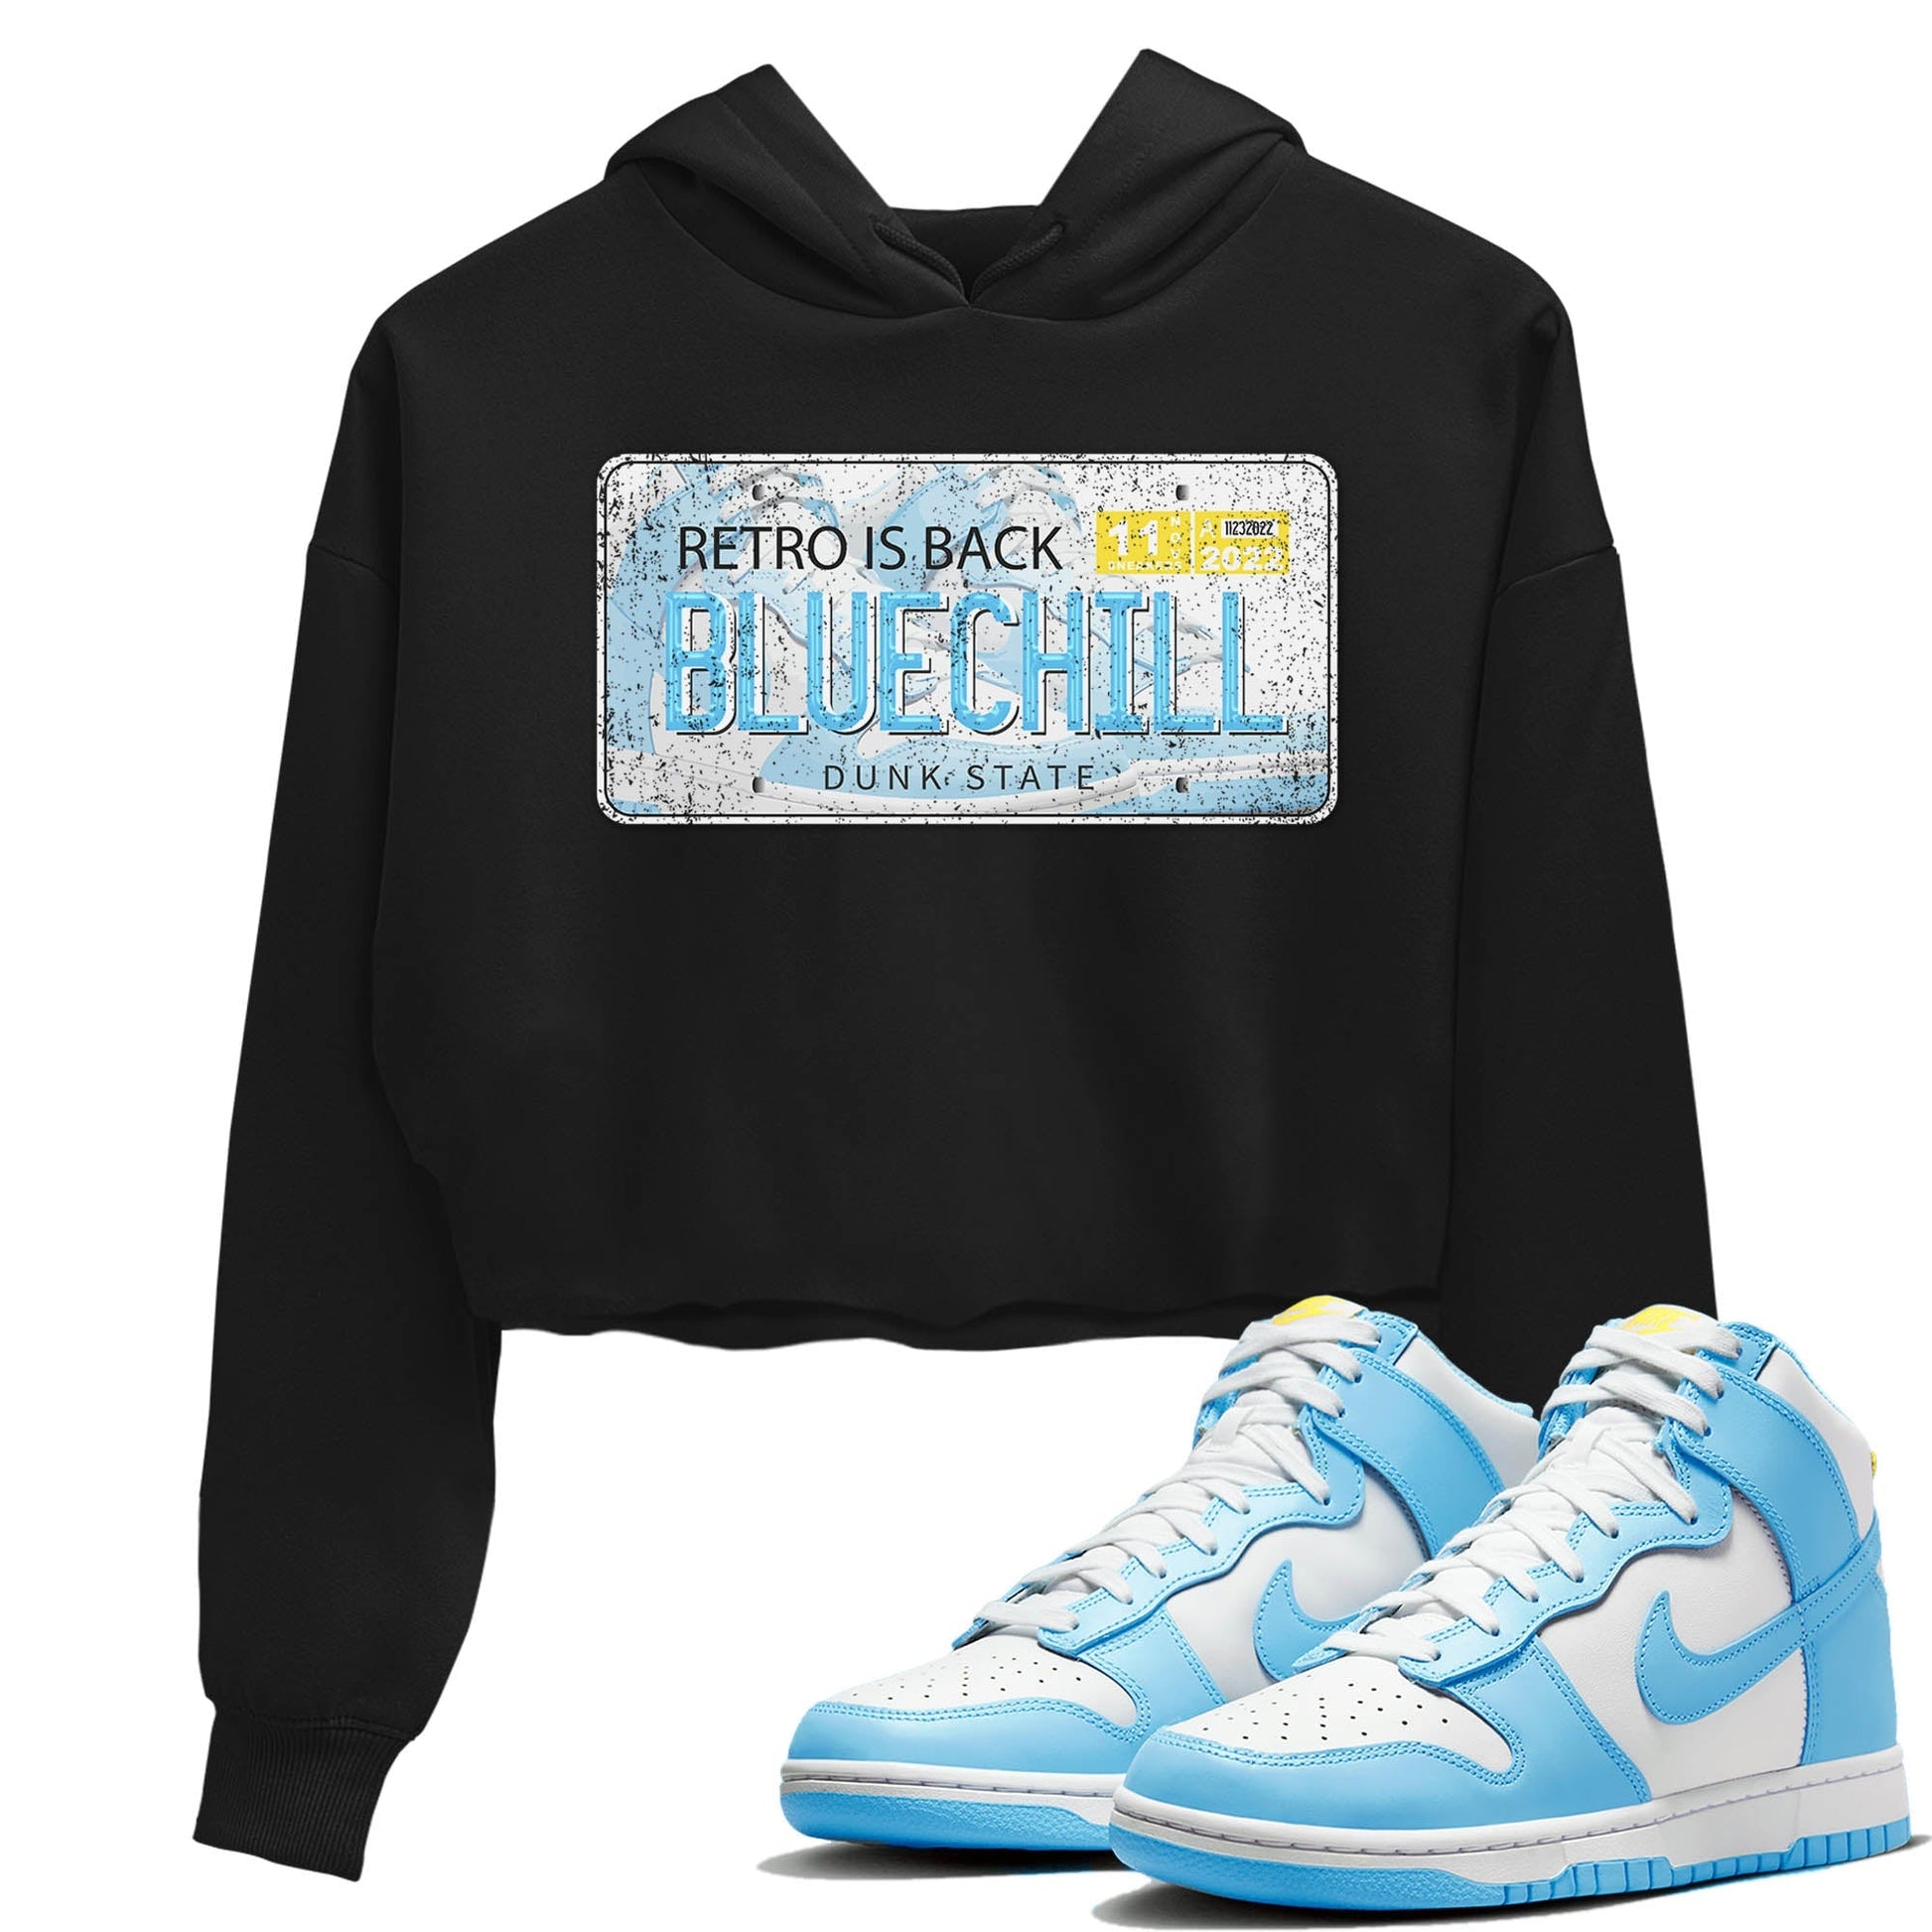 Nike Dunk High Blue Chill Sneaker Match Tees Jordan Plate Sneaker Tees Nike Dunk High Blue Chill Sneaker Release Tees Women's Shirts